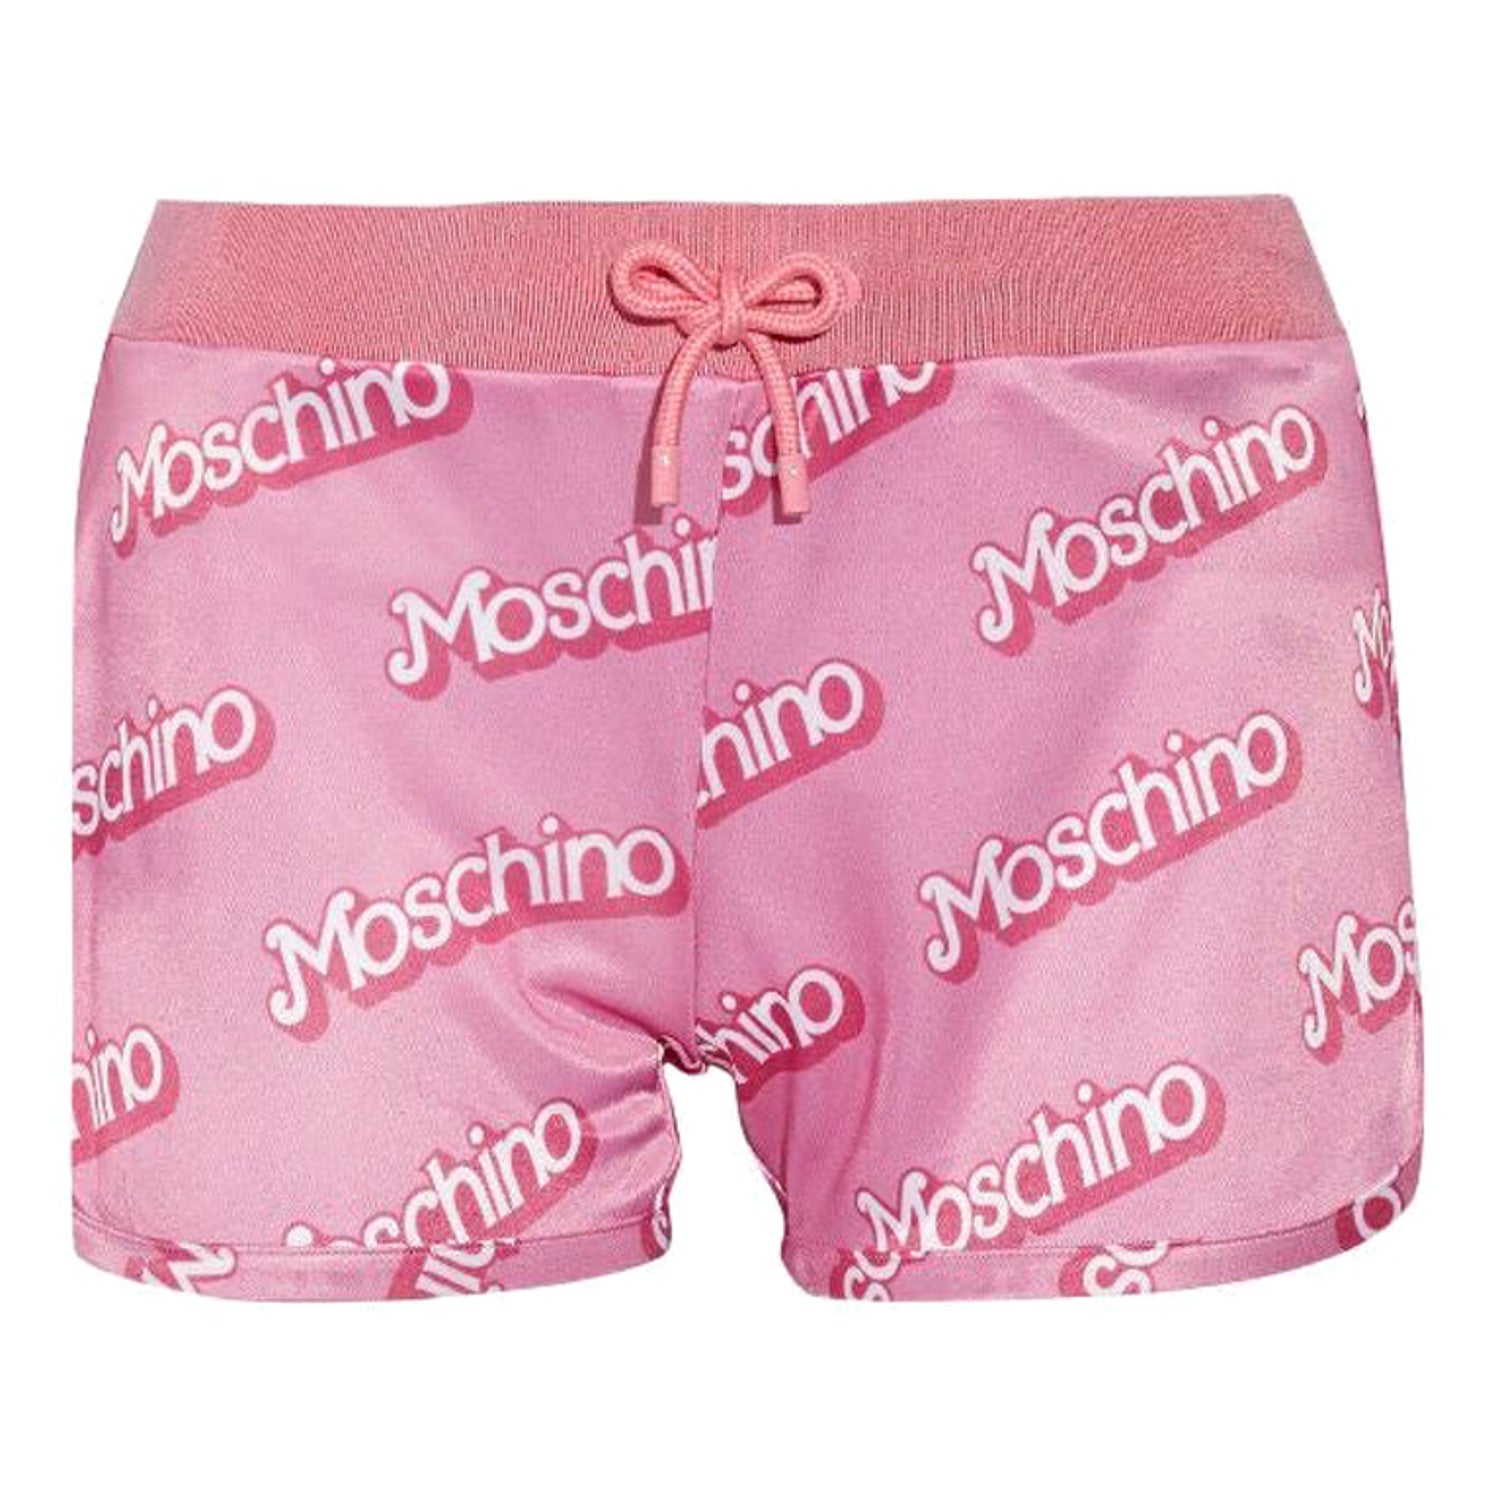 Moschino Barbie collection｜TikTok Search